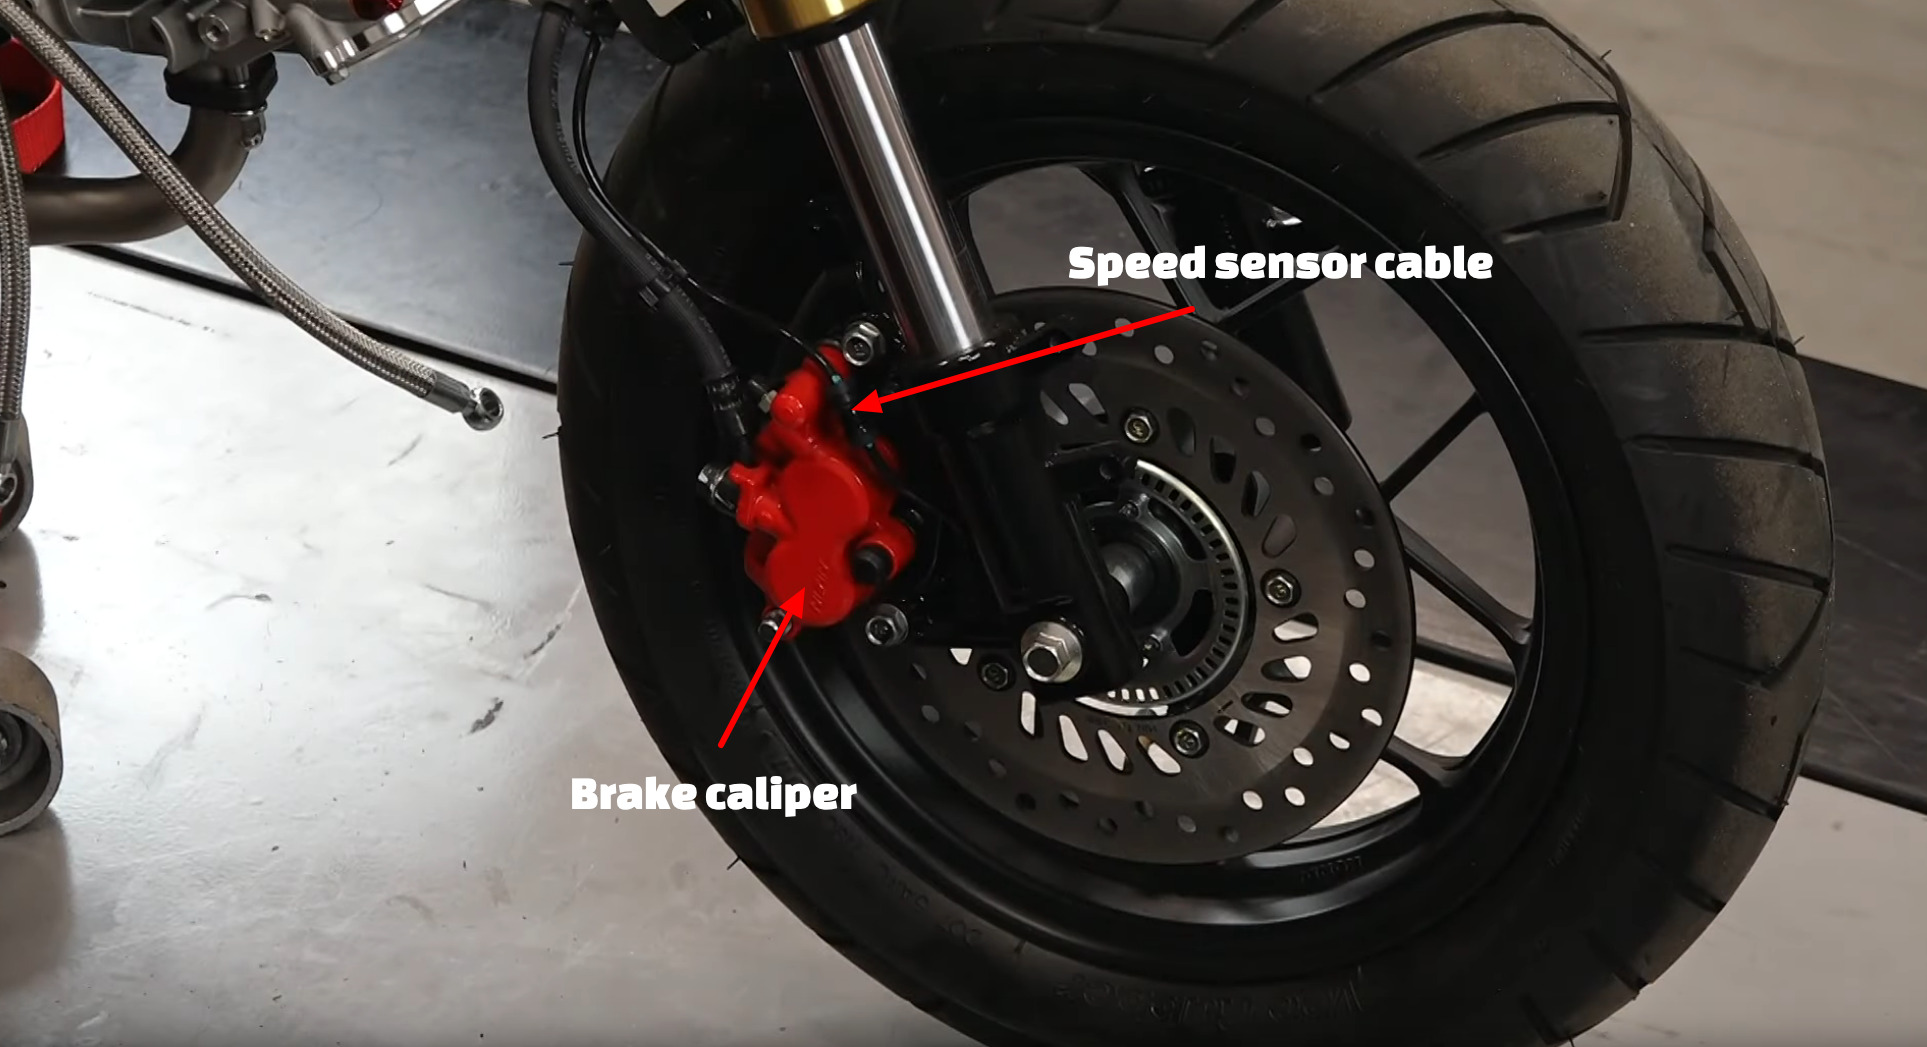 2018 Honda Grom suspension upgrade